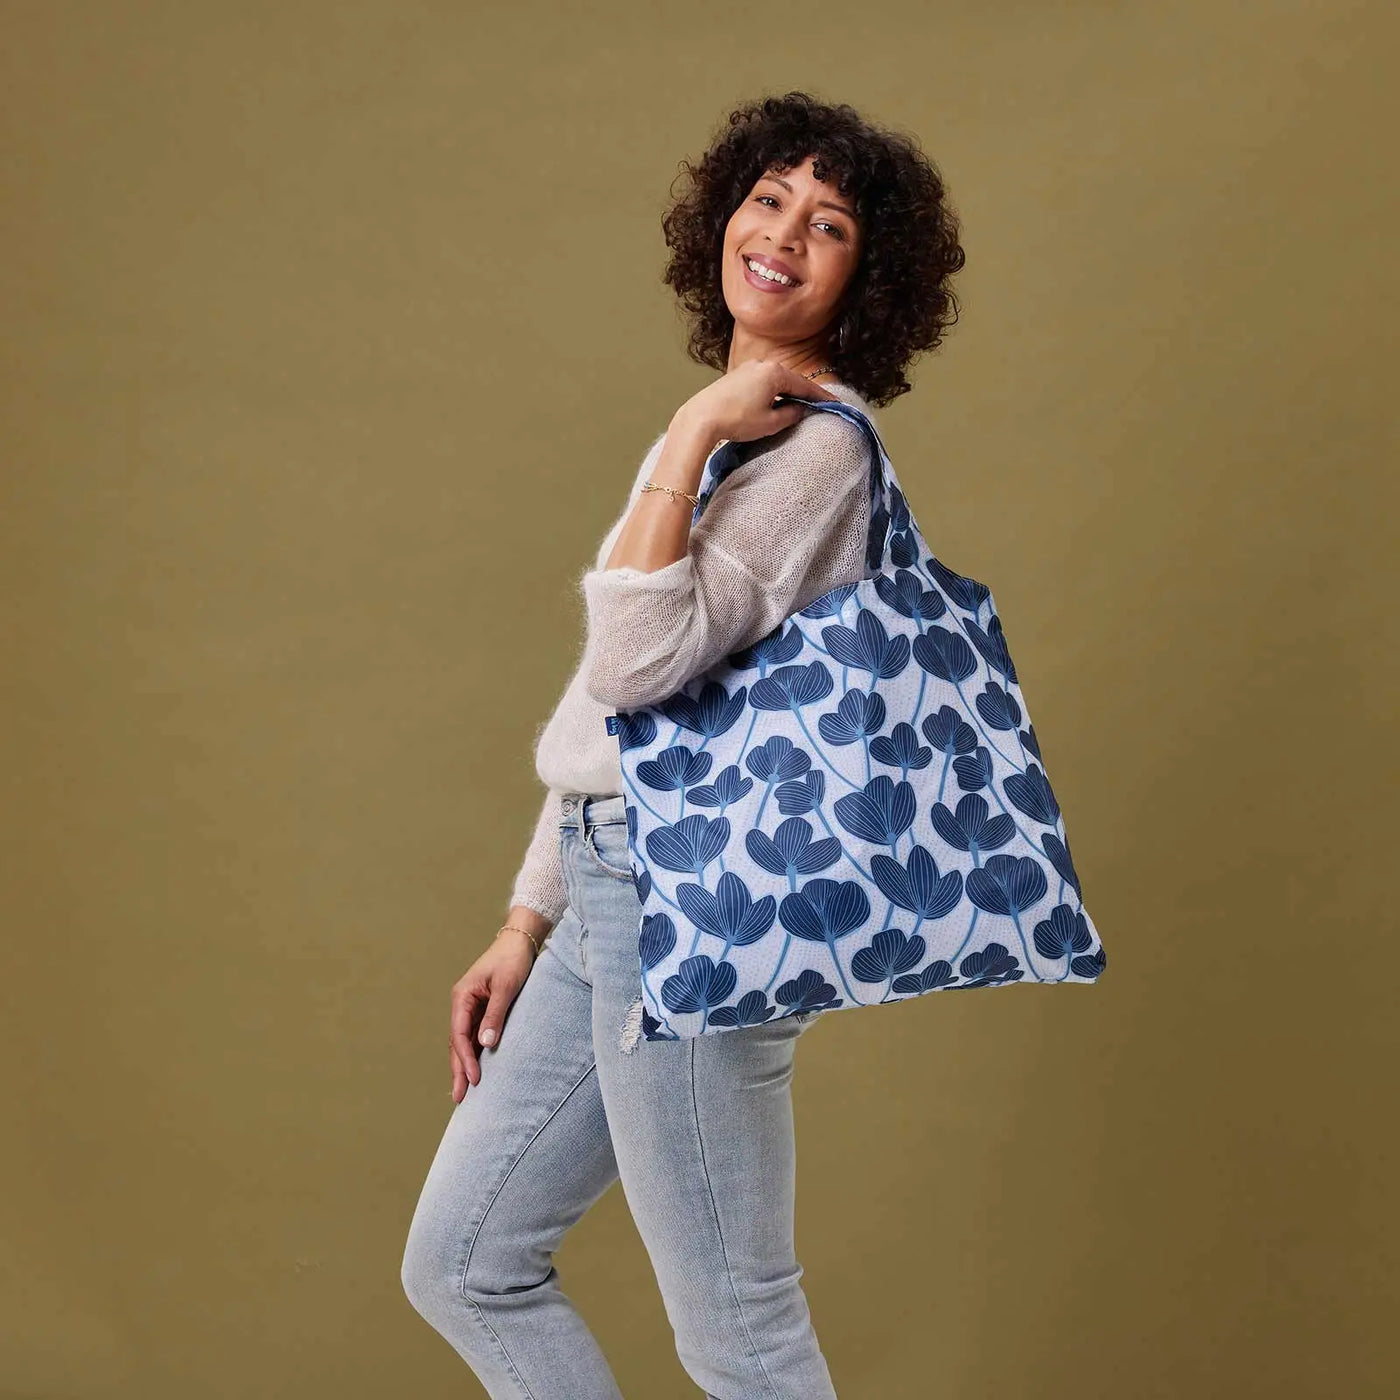 Modern Poppy | 'Blu Bag' | Reusable Bag